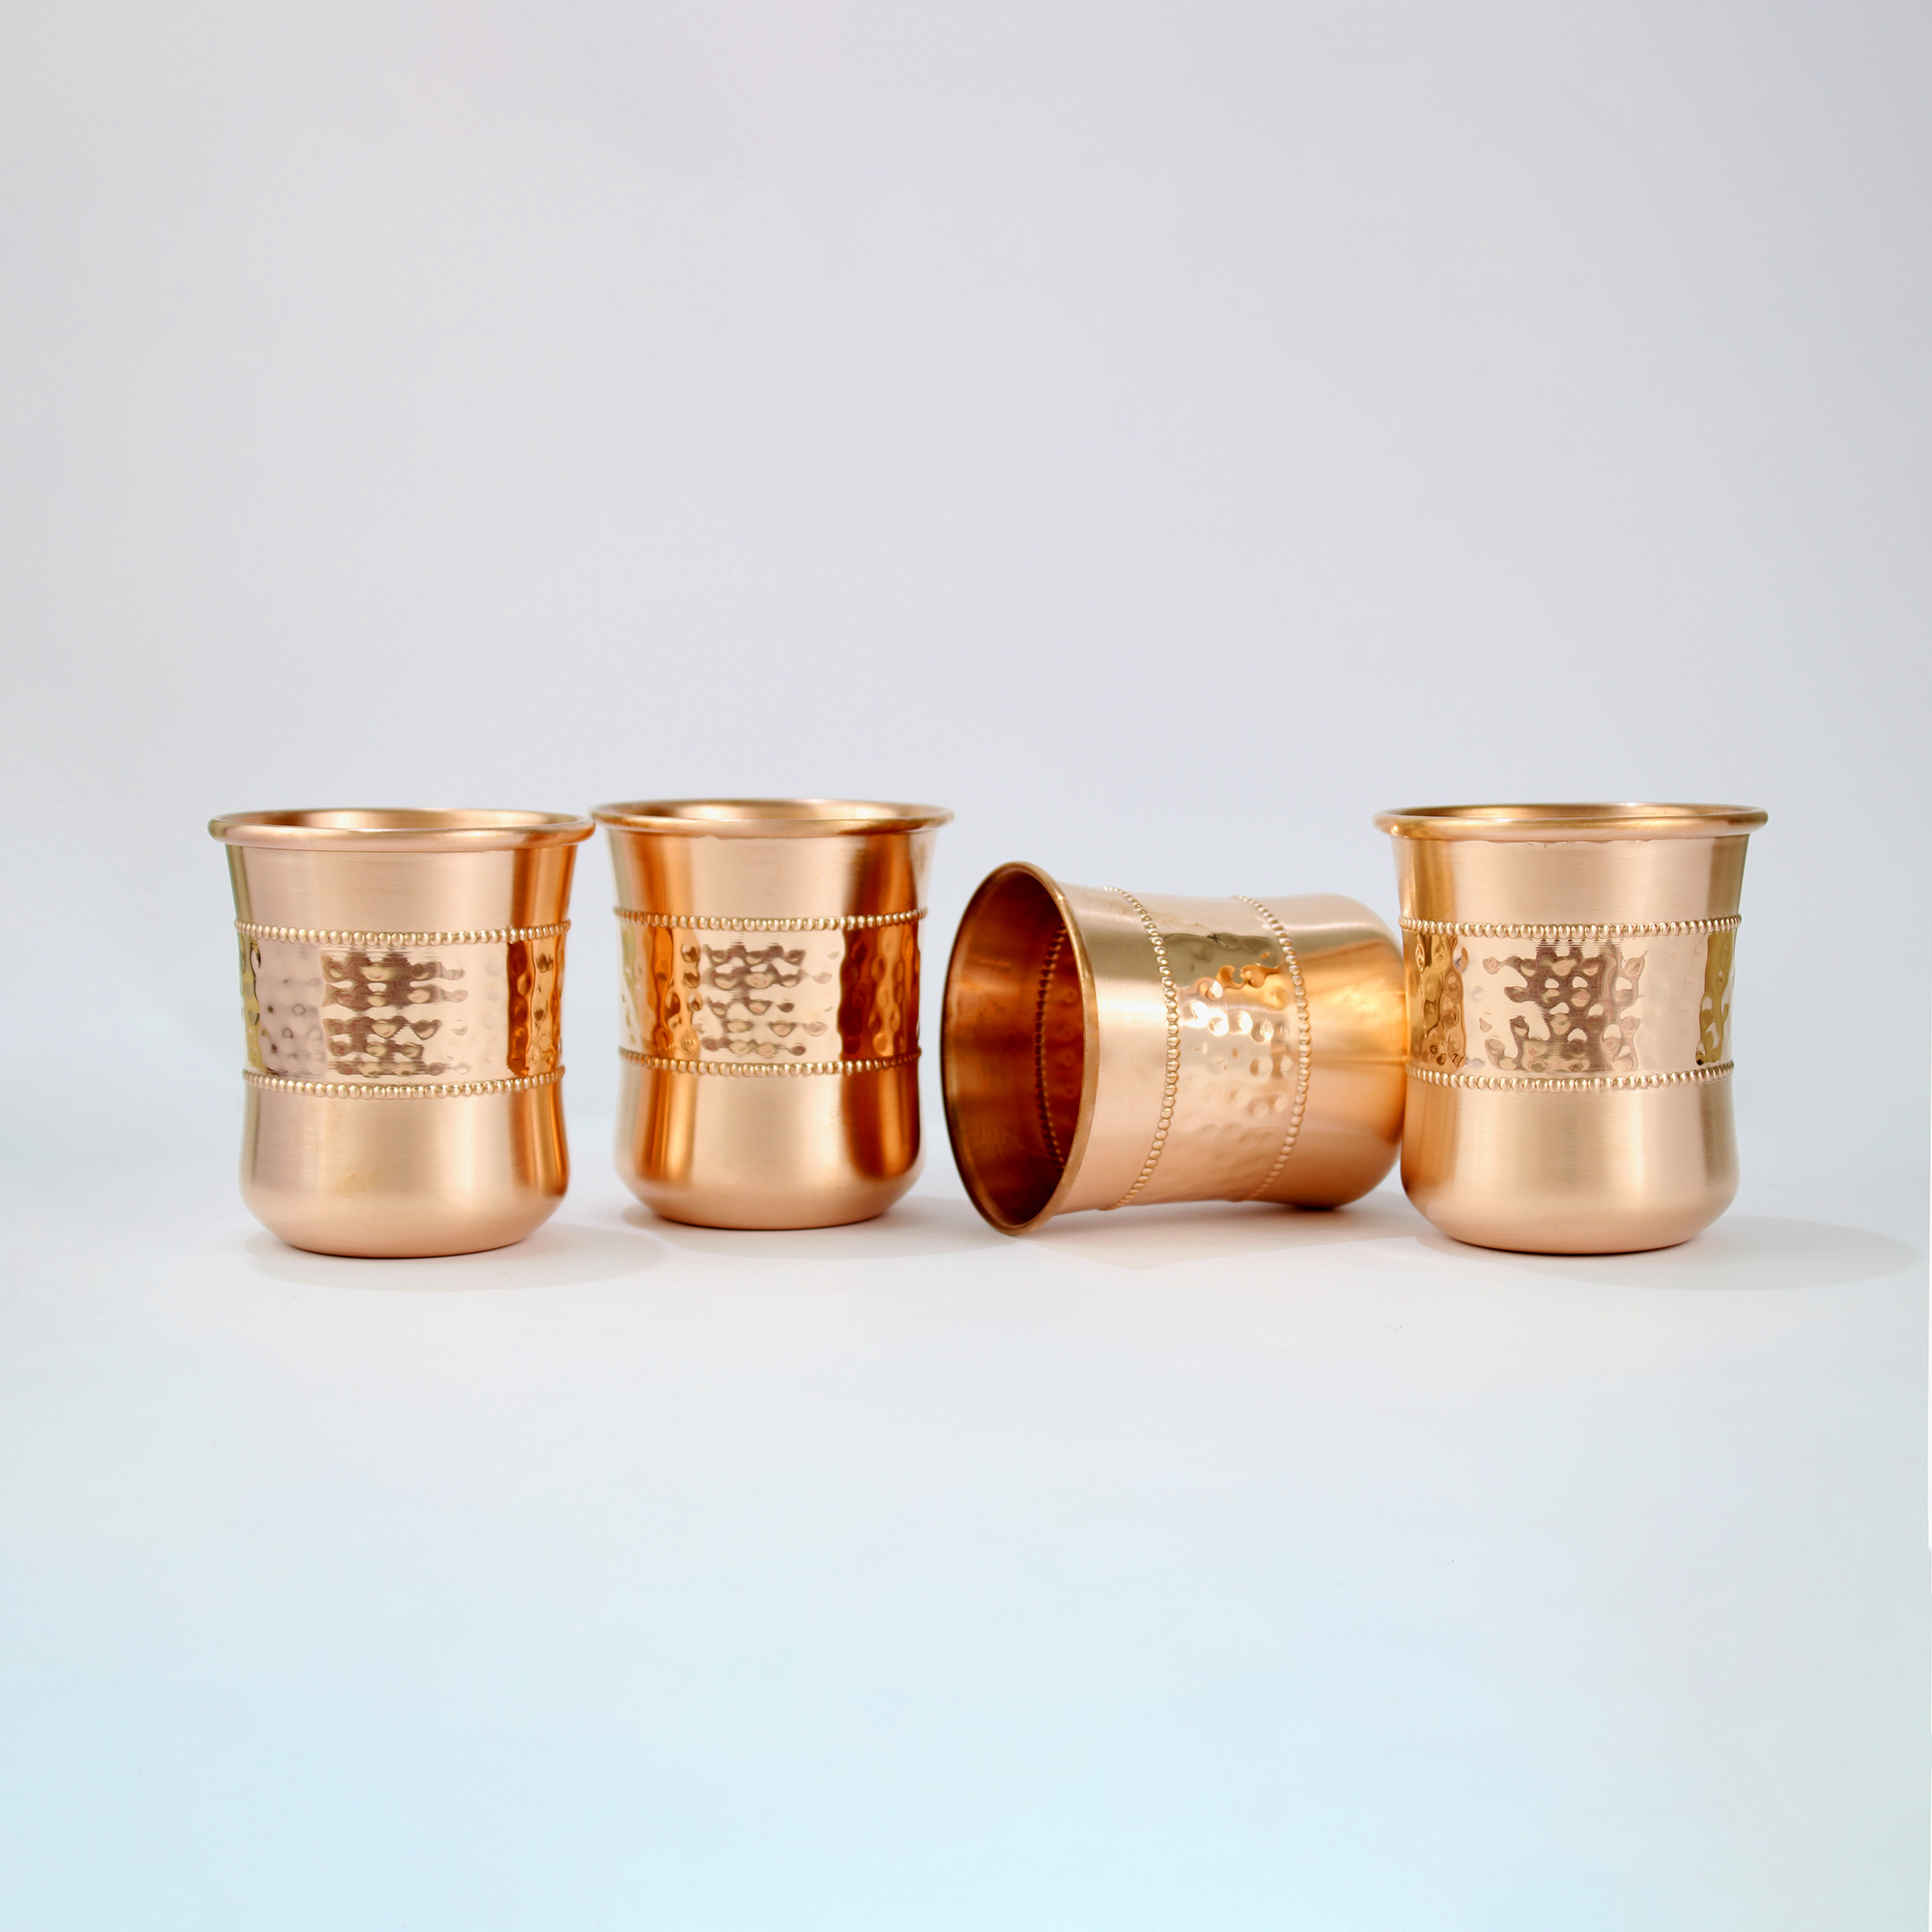 El'Cobre Premium Curved Copper Sequence Glass - 250 ML (Set of 4 Glasses)